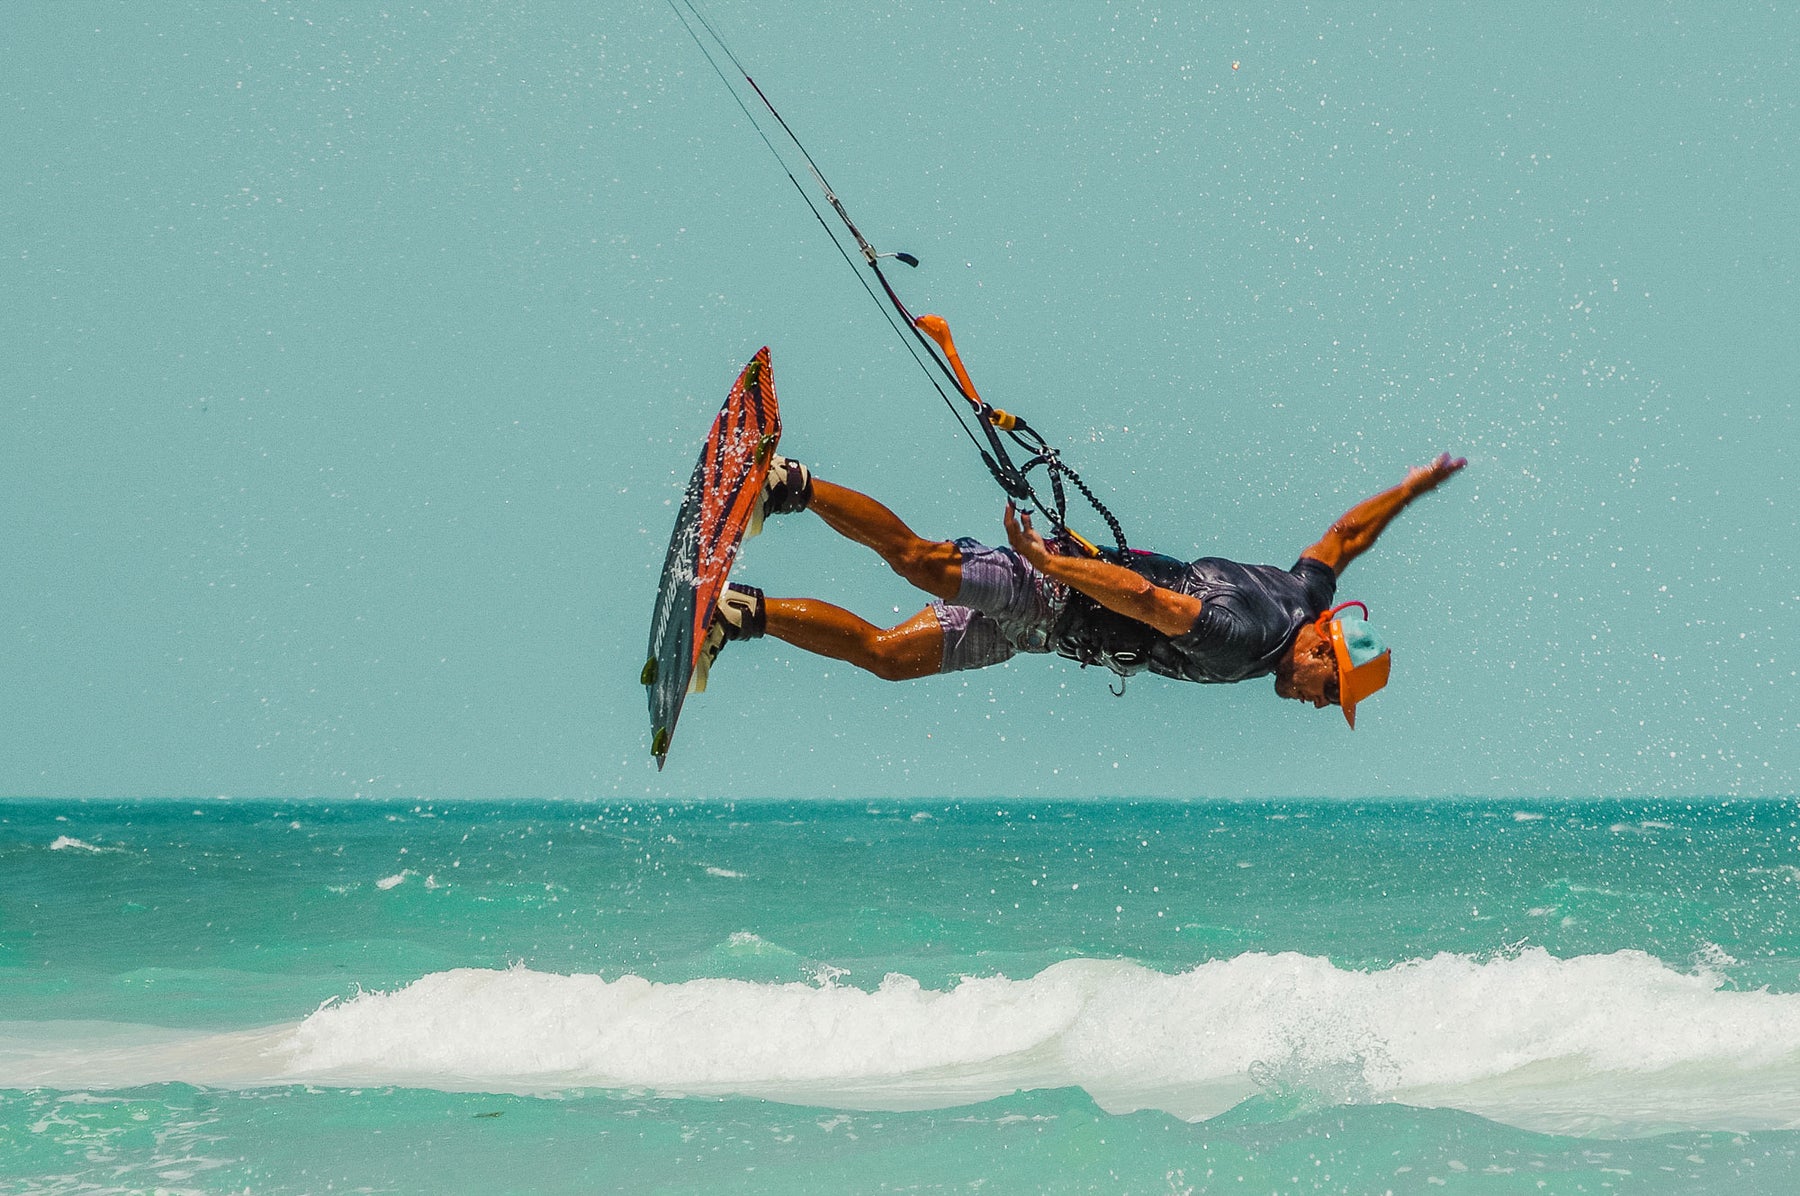 BUOY WEAR founder John Ruffing out in the ocean kiteboarding and wearing an orange floating, waterproof hat.